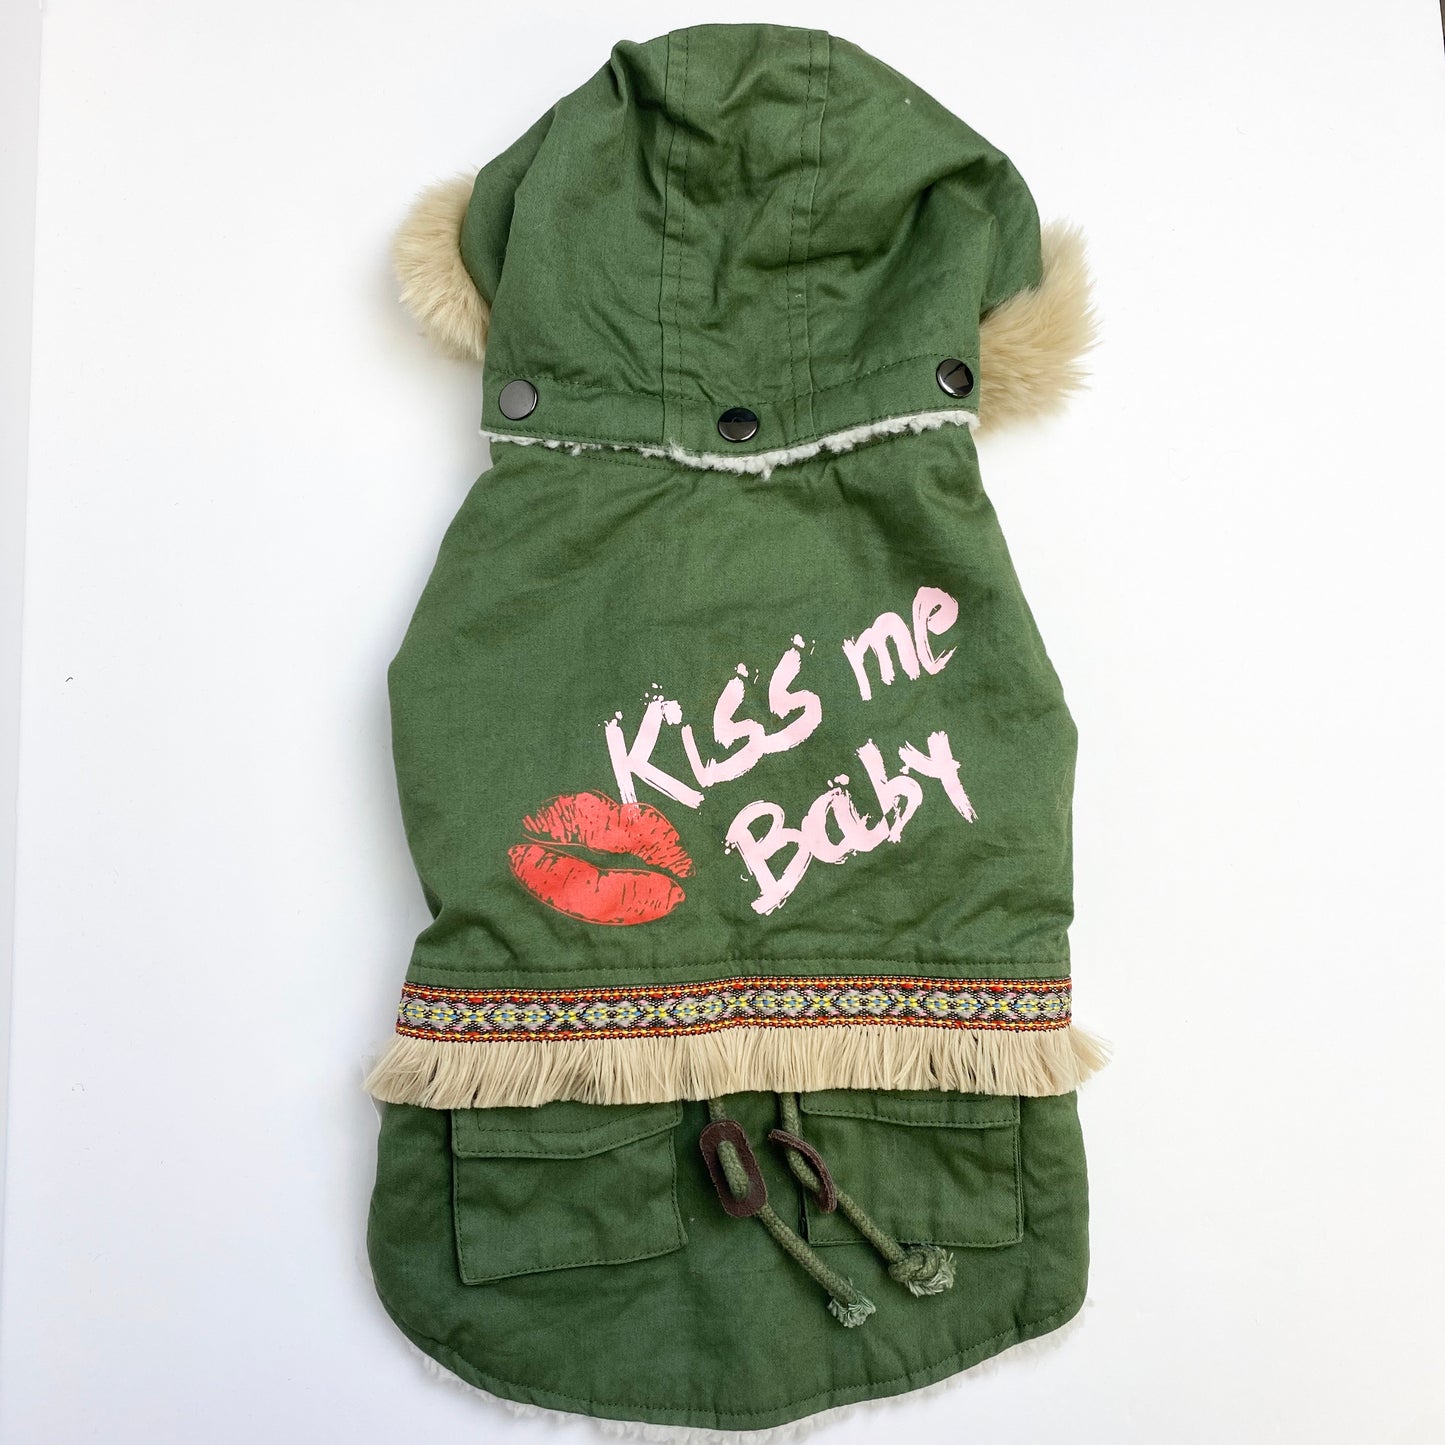 IsPet - Green "Kiss Me Baby" Jacket